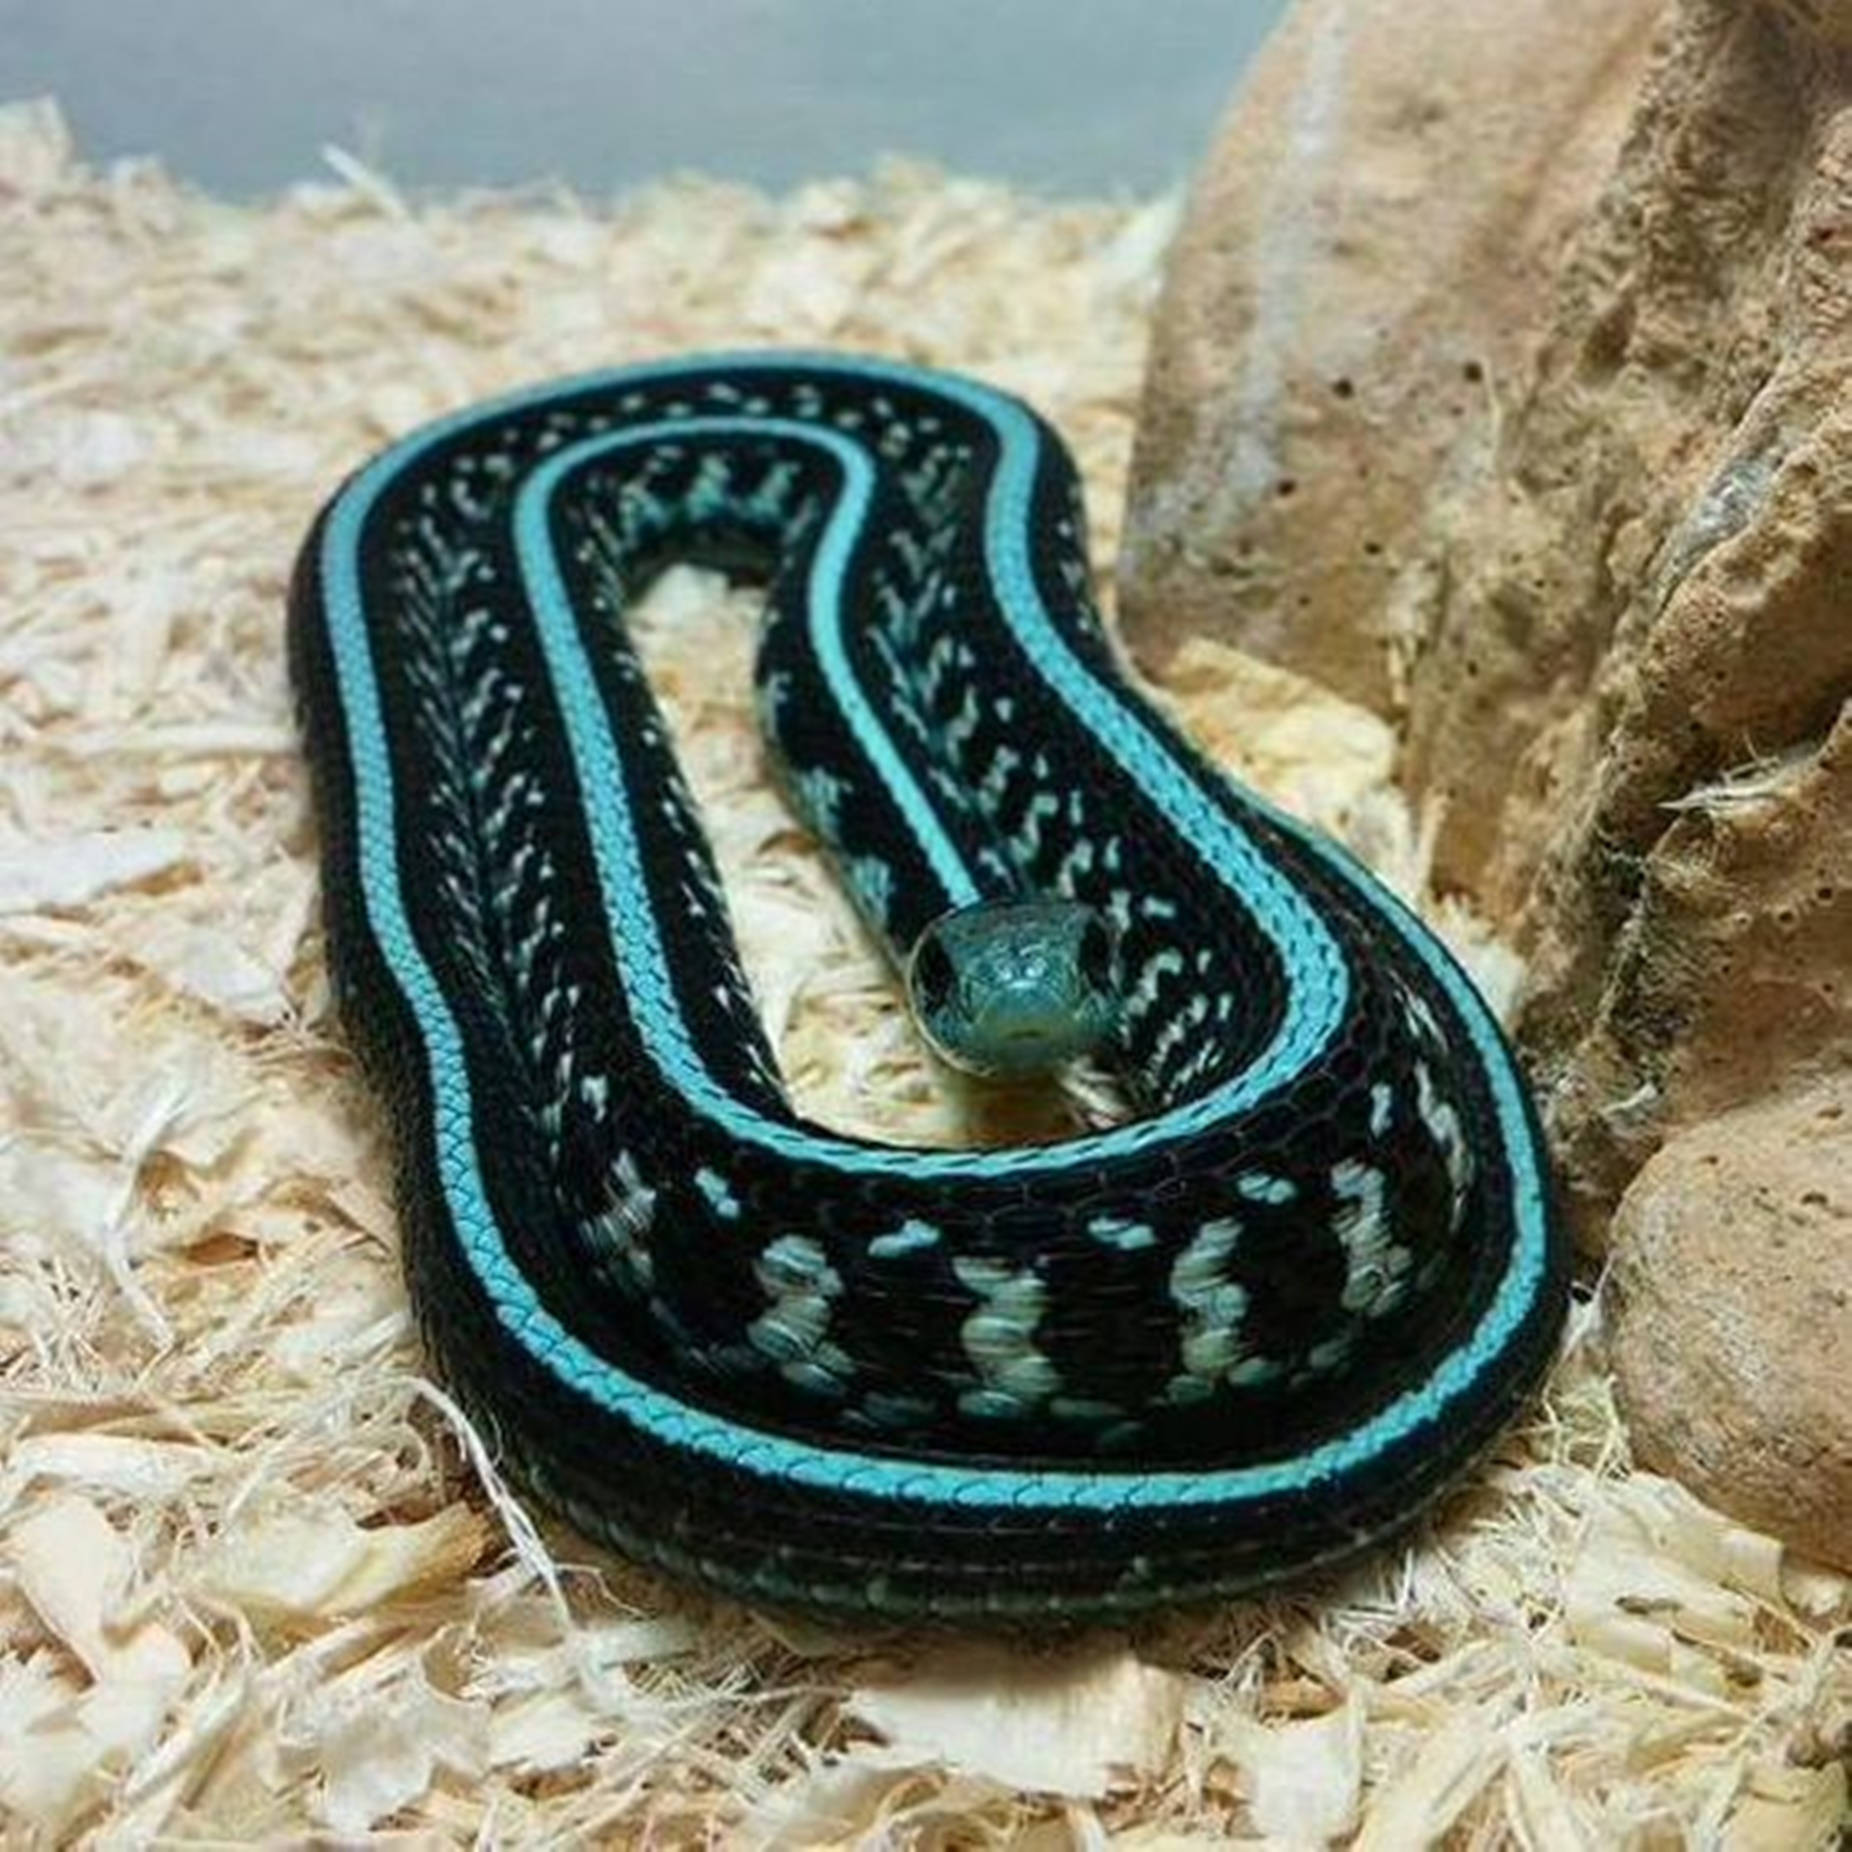 Striking Garter Snake in Natural Habitat Wallpaper